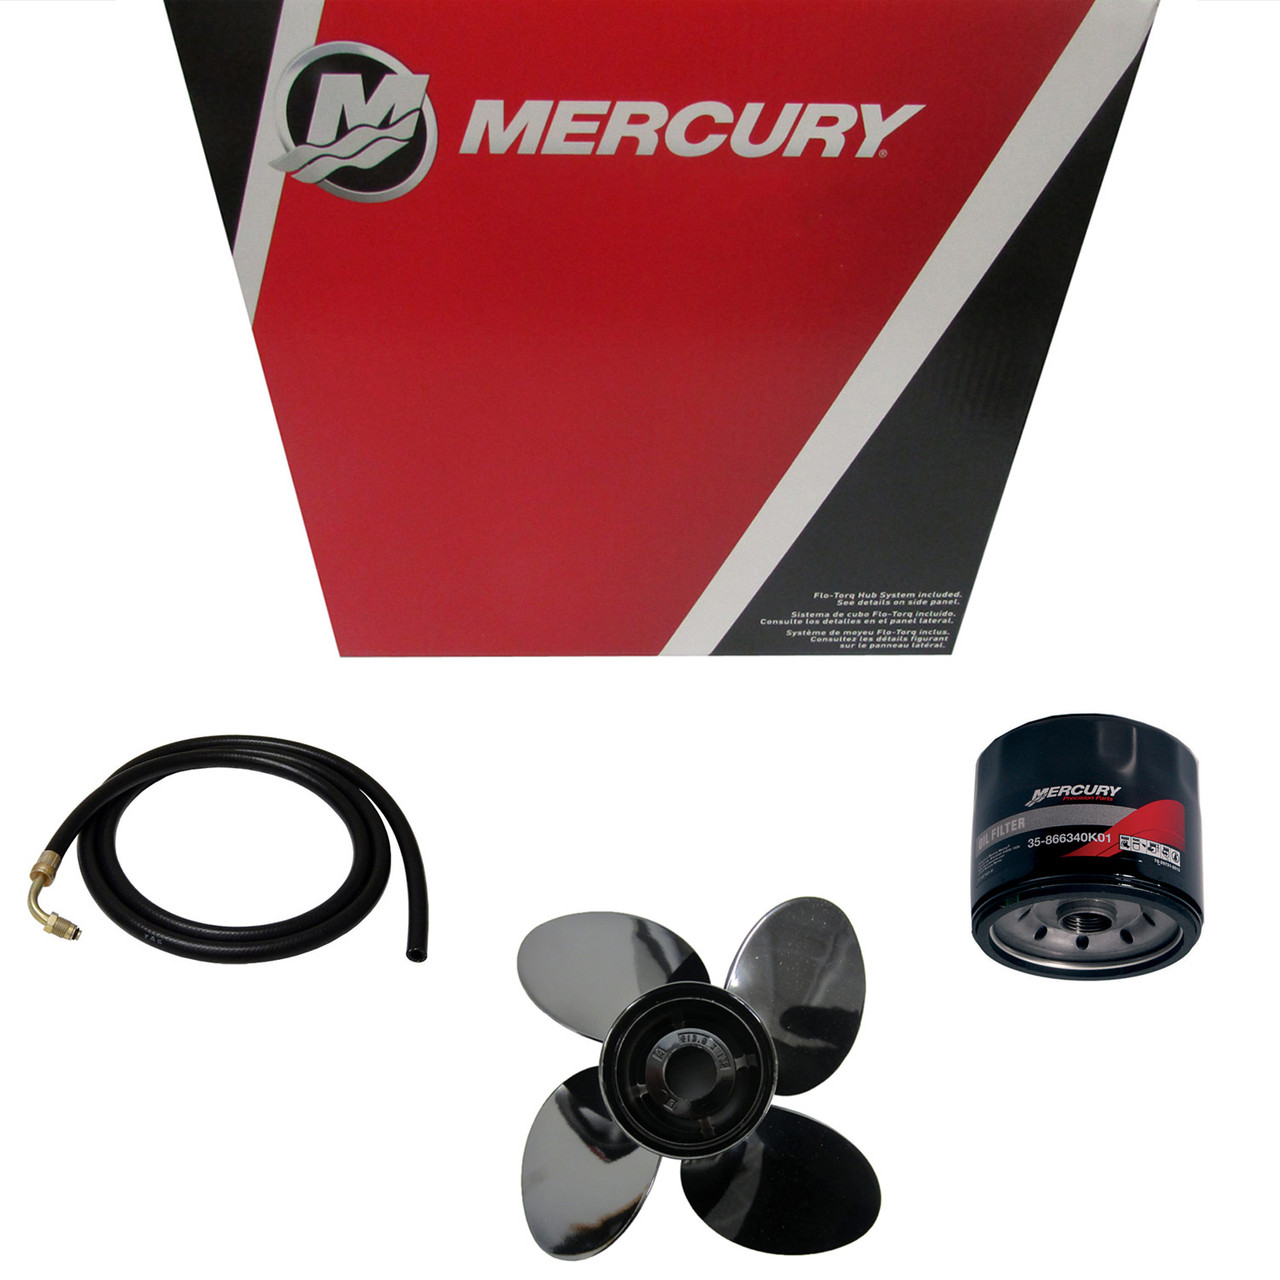 Mercury Marine / Mercruiser New OEM Rebuild Kit, 893917A01